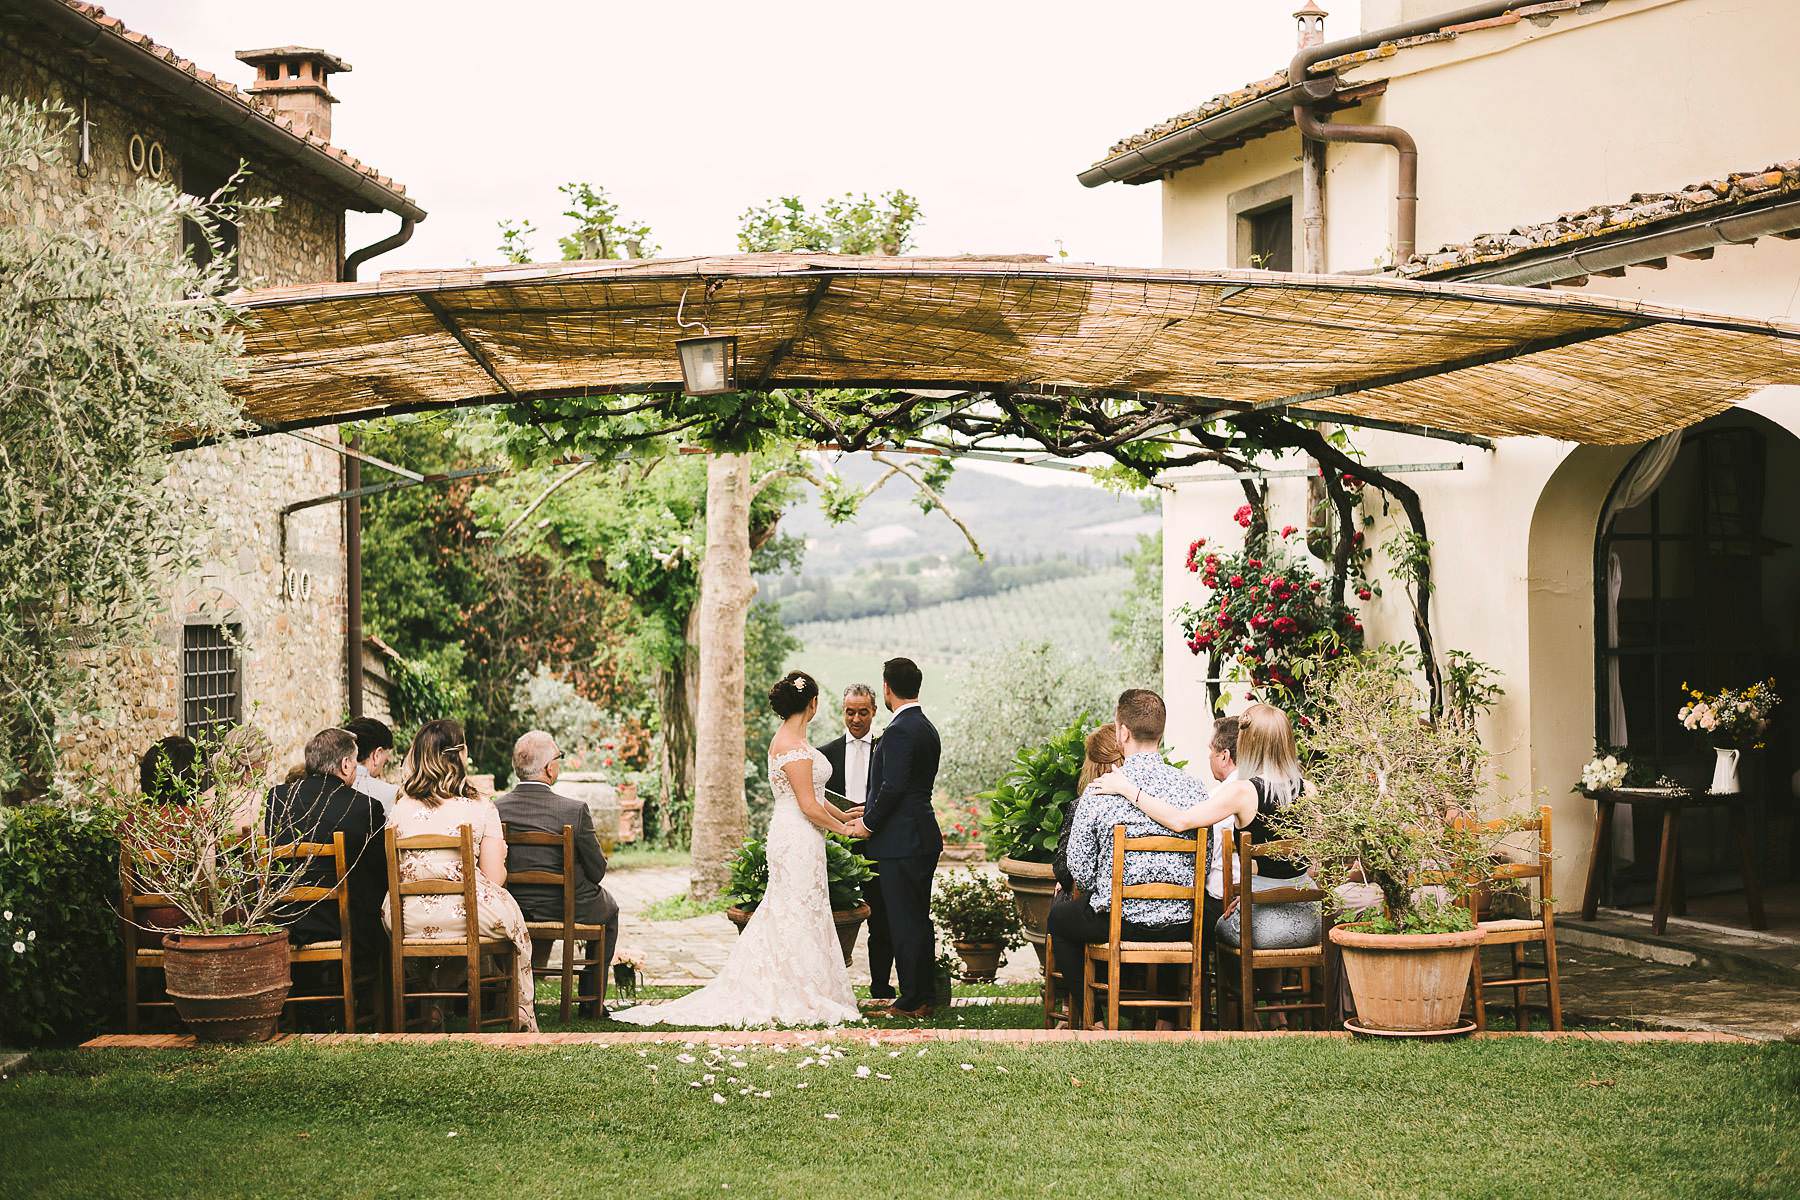 Intimate destination wedding Tuscany countryside Villa Ripanera